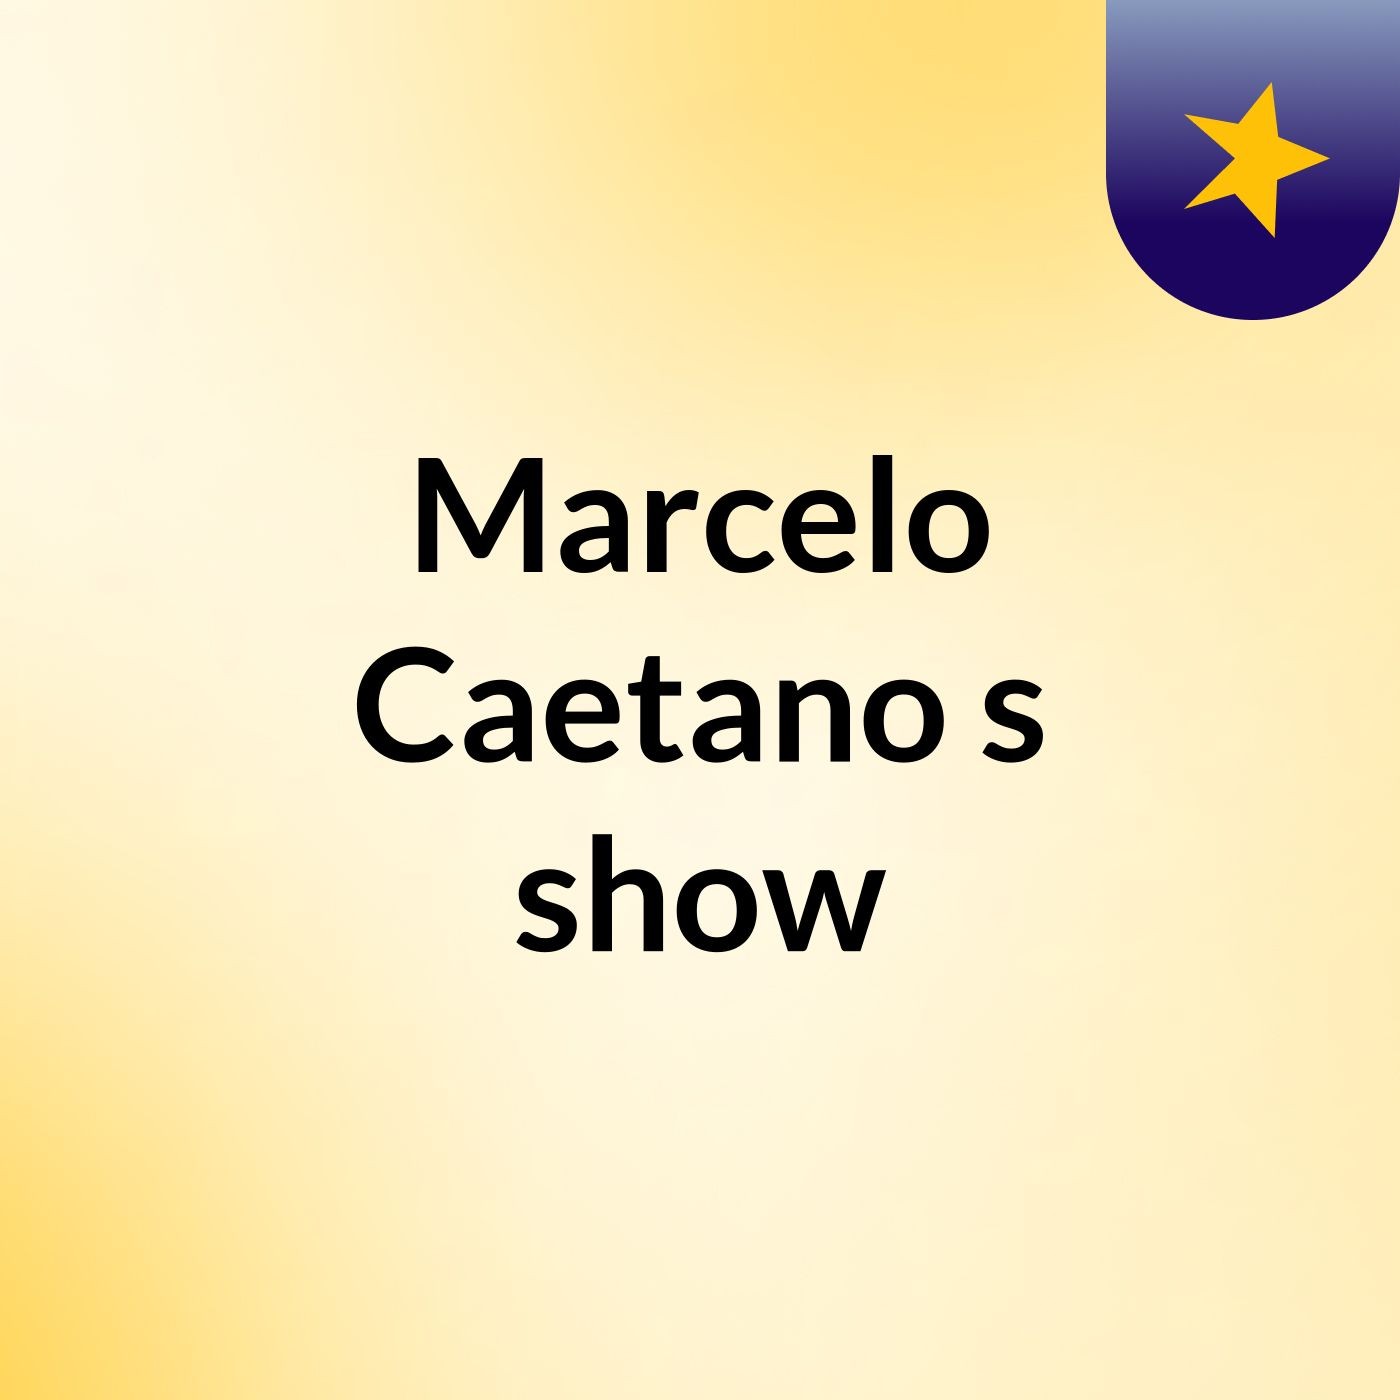 Marcelo Caetano's show